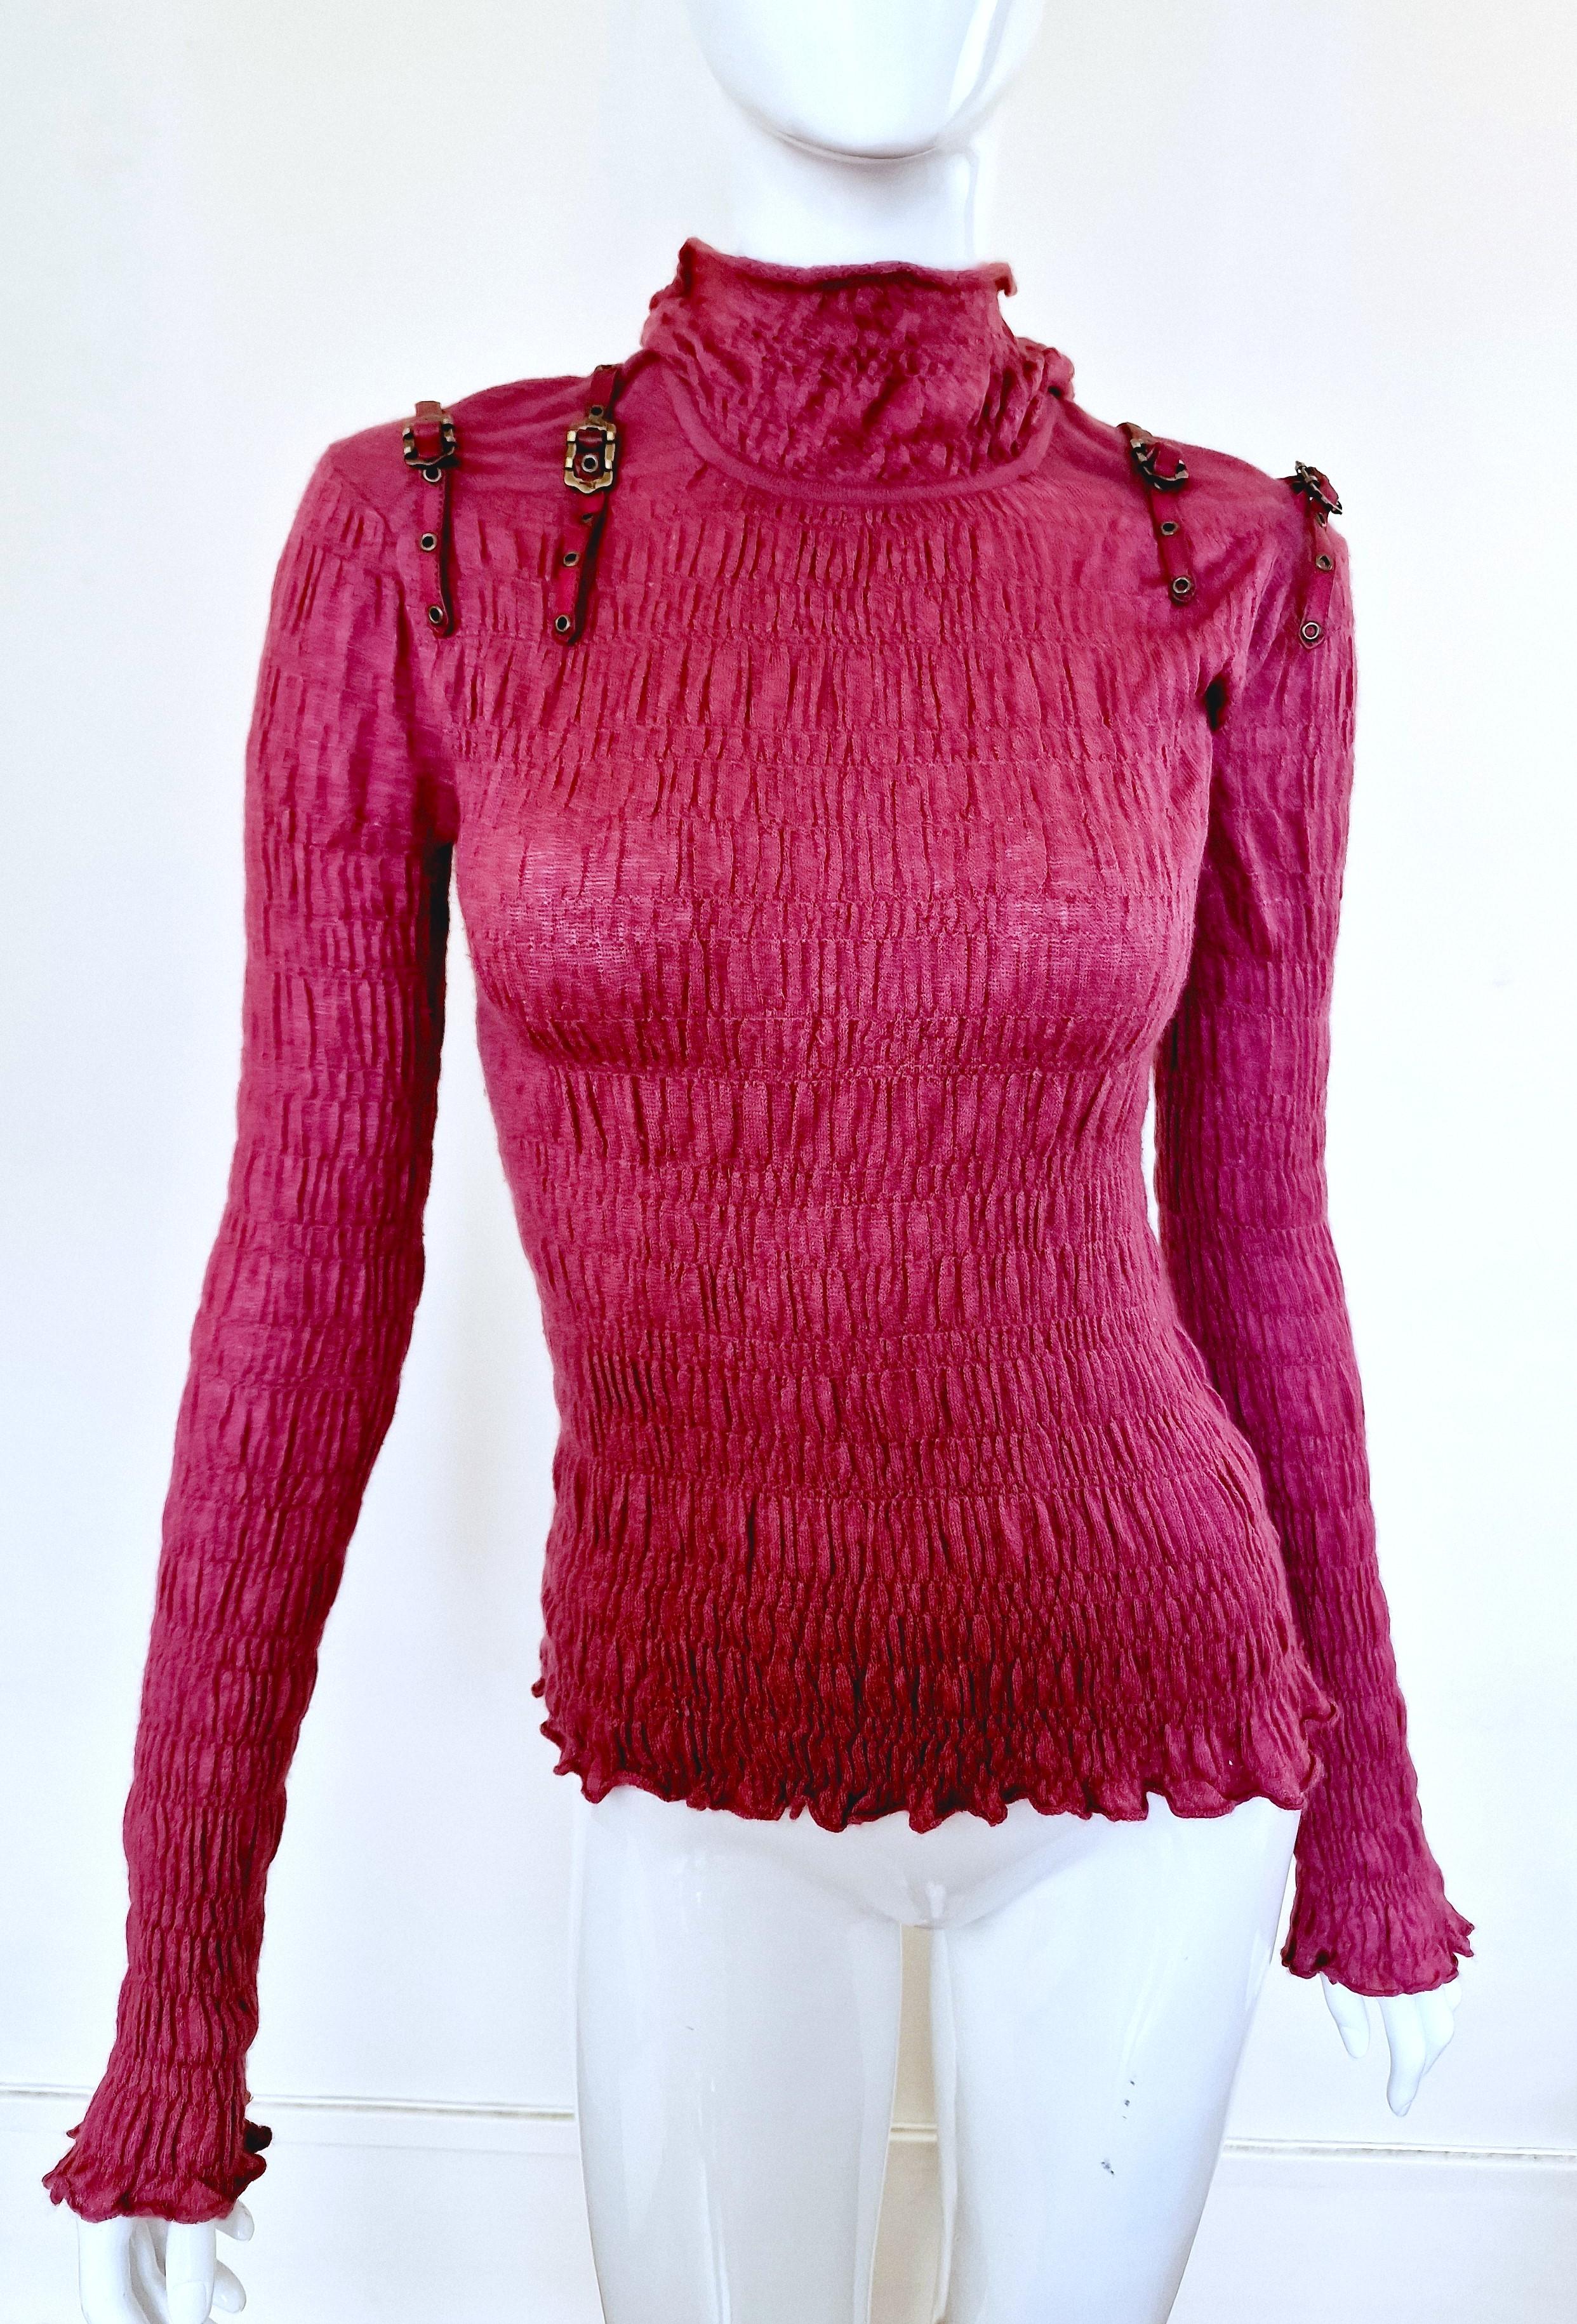 Women's Christian Dior Bondage Straps Strap J'adore Cachmire Silk Sweater Shirt Tee Top  For Sale